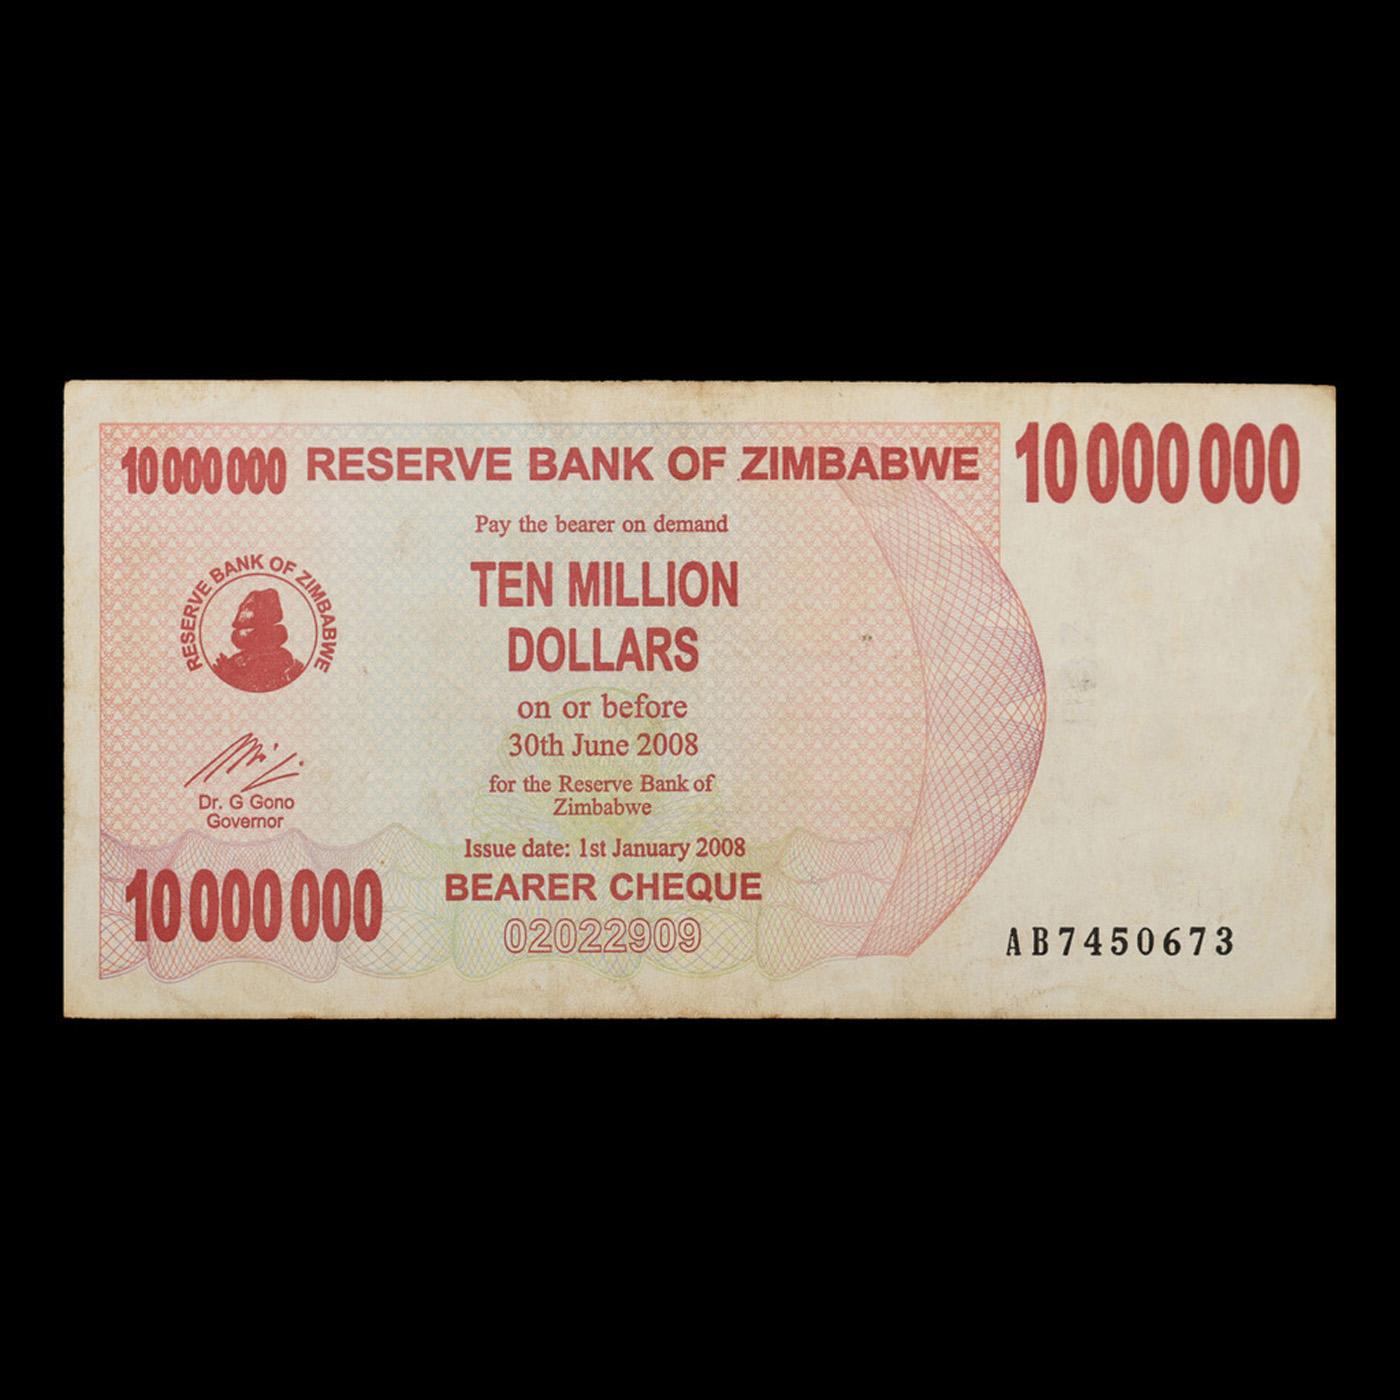 2006-2008 Zimbabwe 10 Million Dollars (ZWN) Hyperinflation Banknote P# 55a Grades xf+